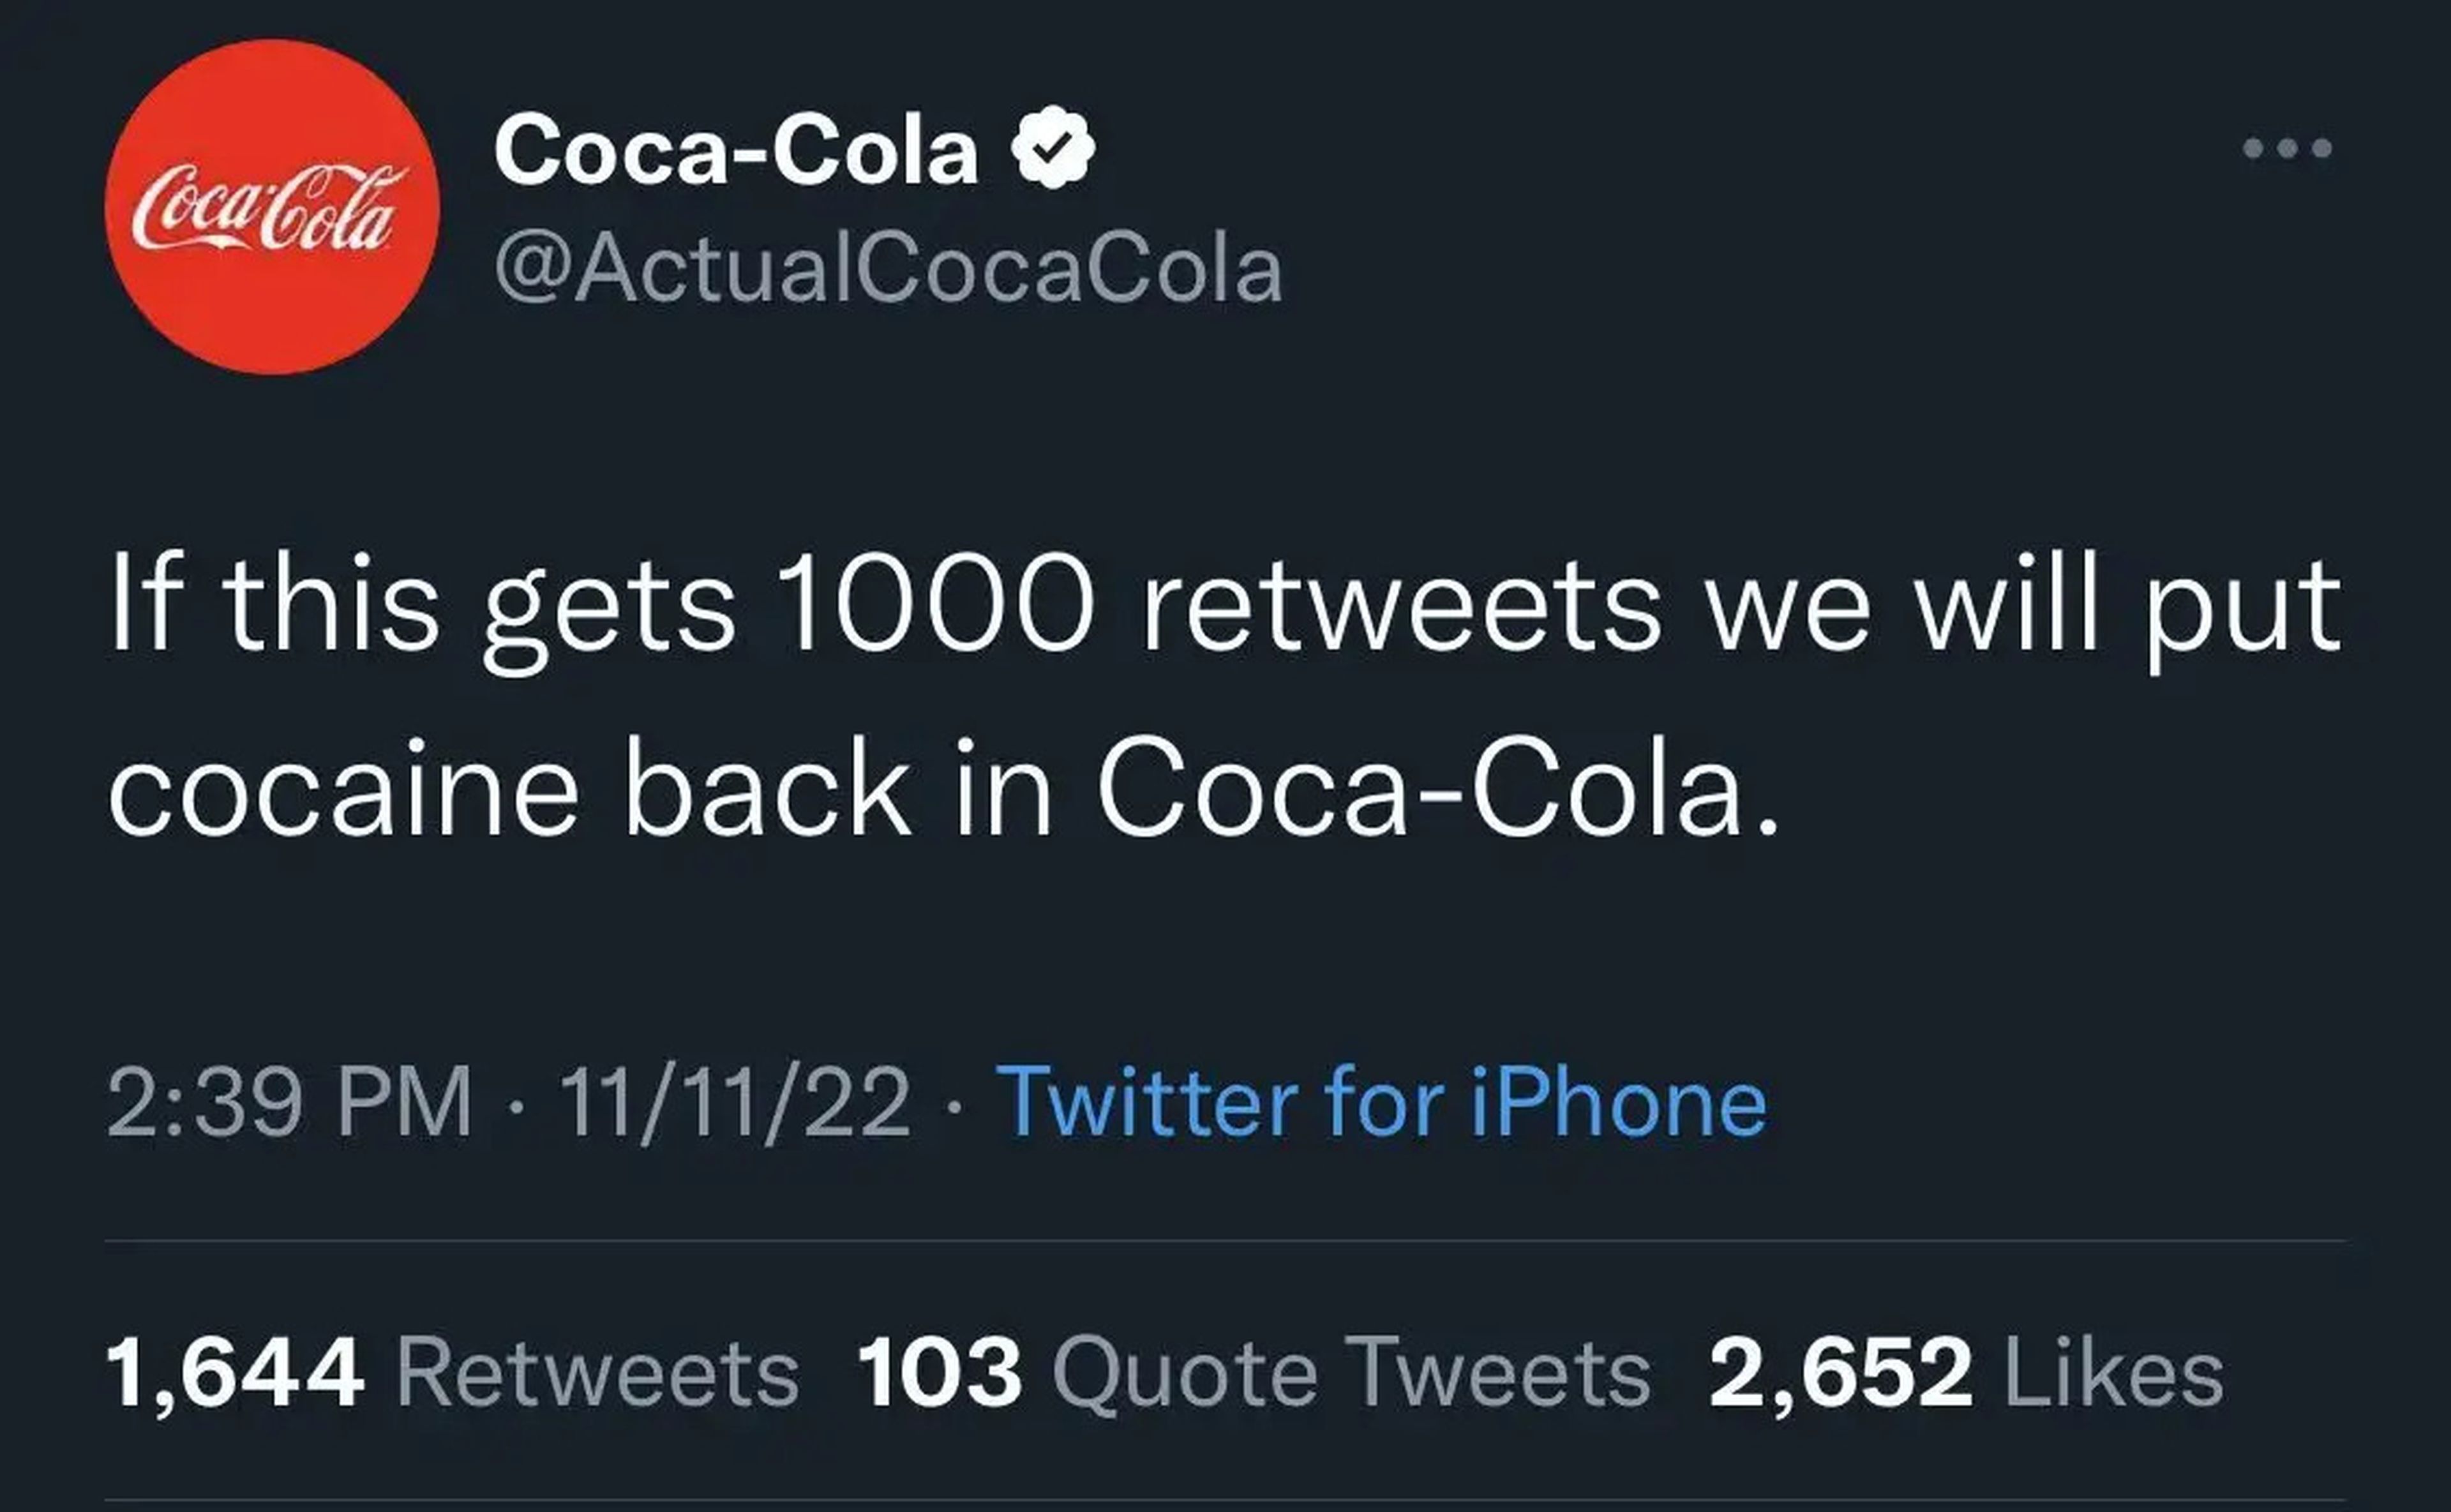 Tweet from Coca-Cola impersonator